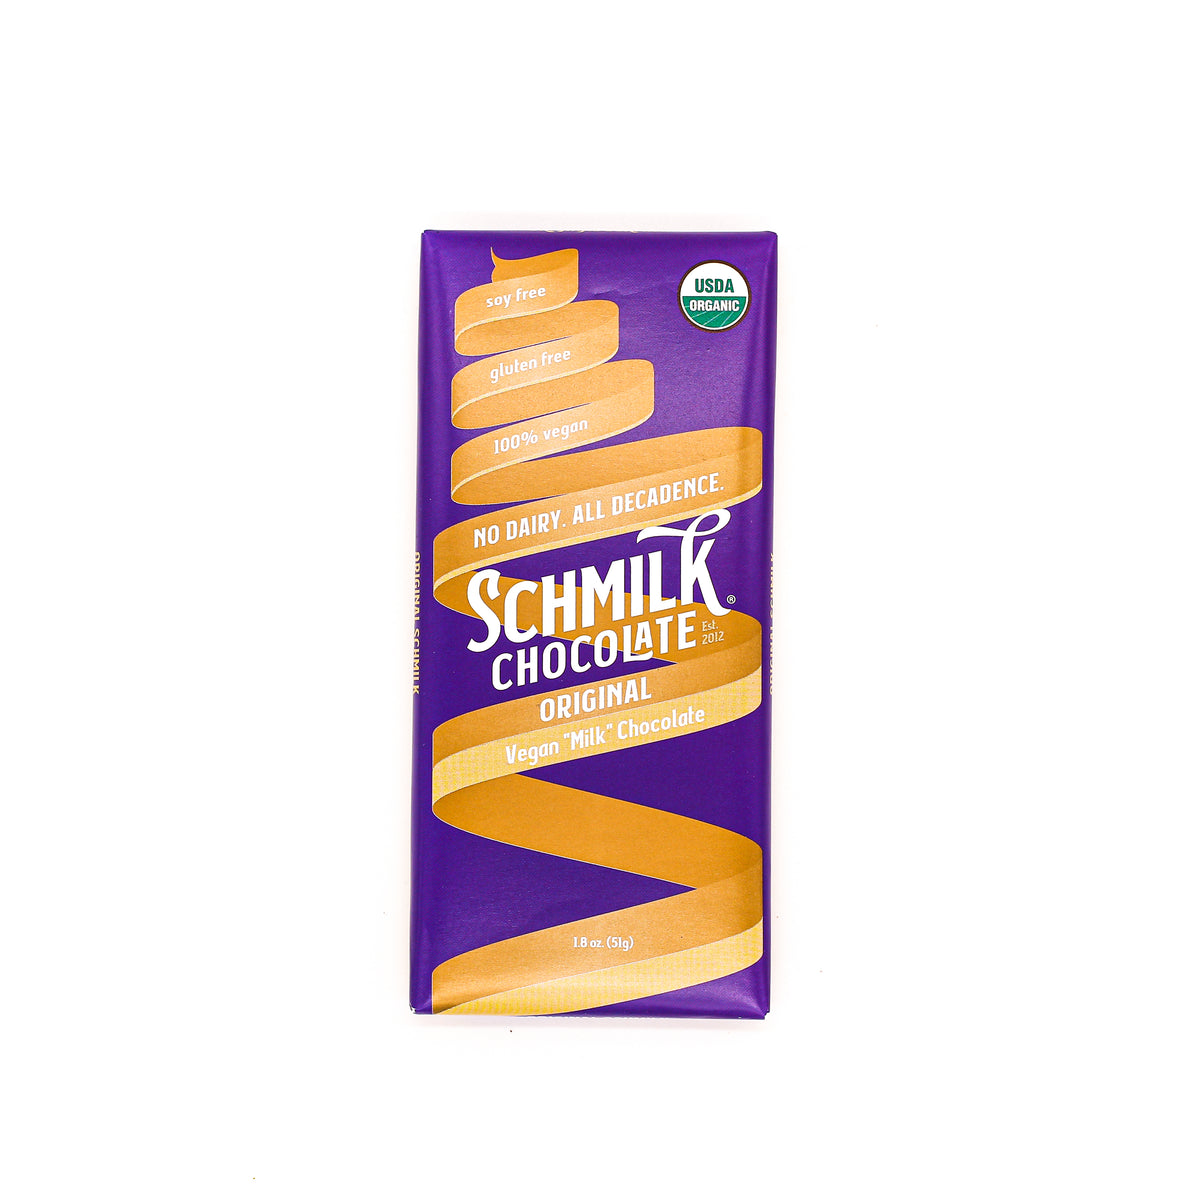 Schmilk Chocolate Original